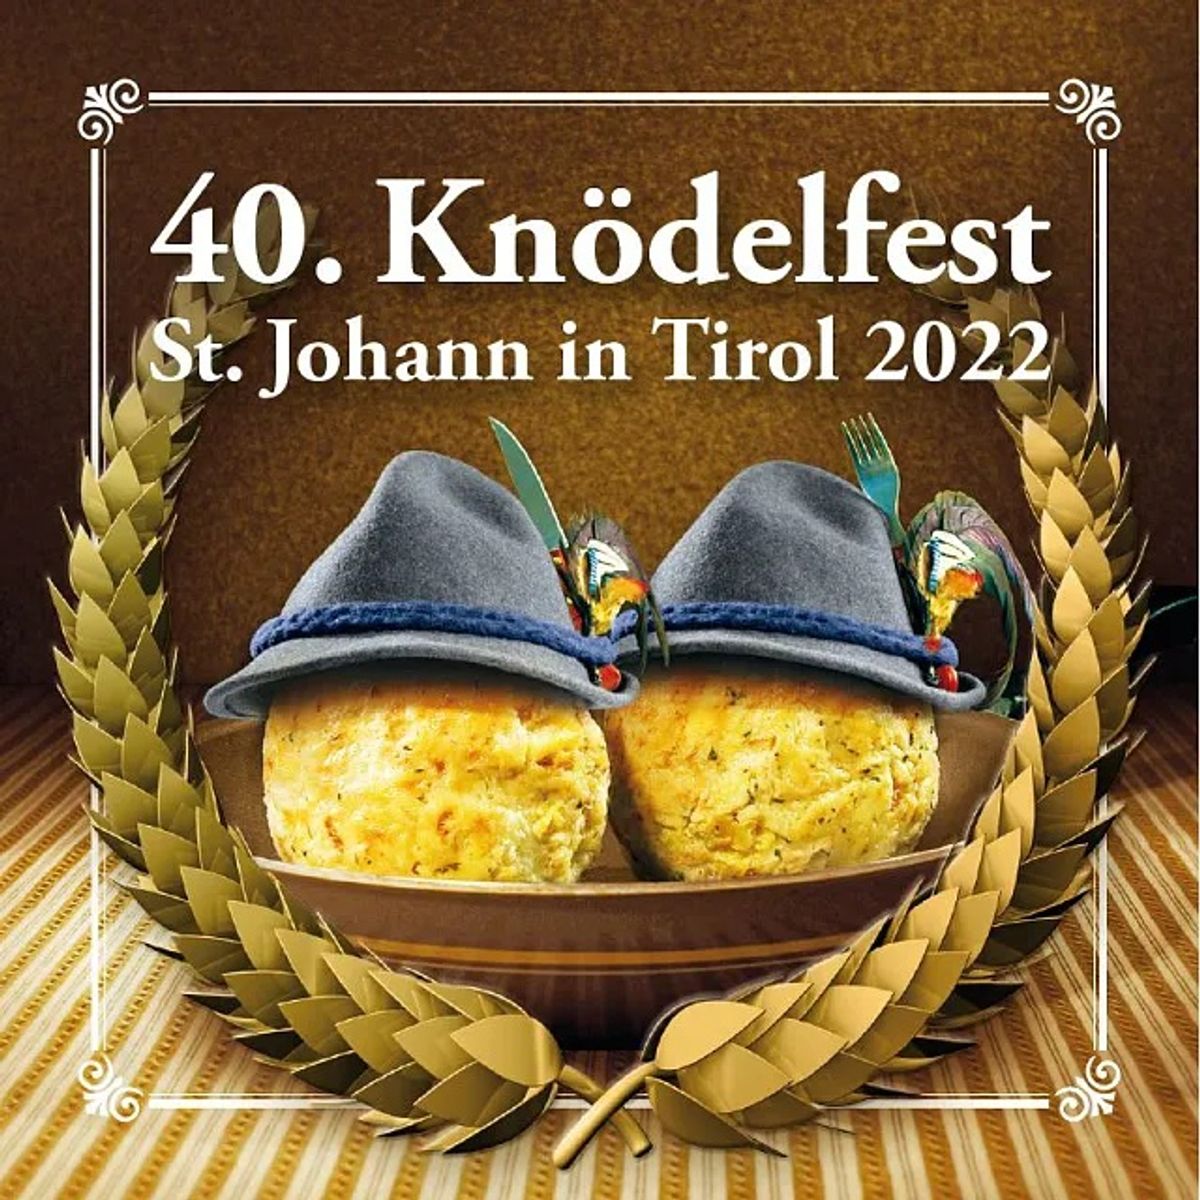 Knödelfest Angebot inkl. Eintritt zum Fest am 24. Sep.!